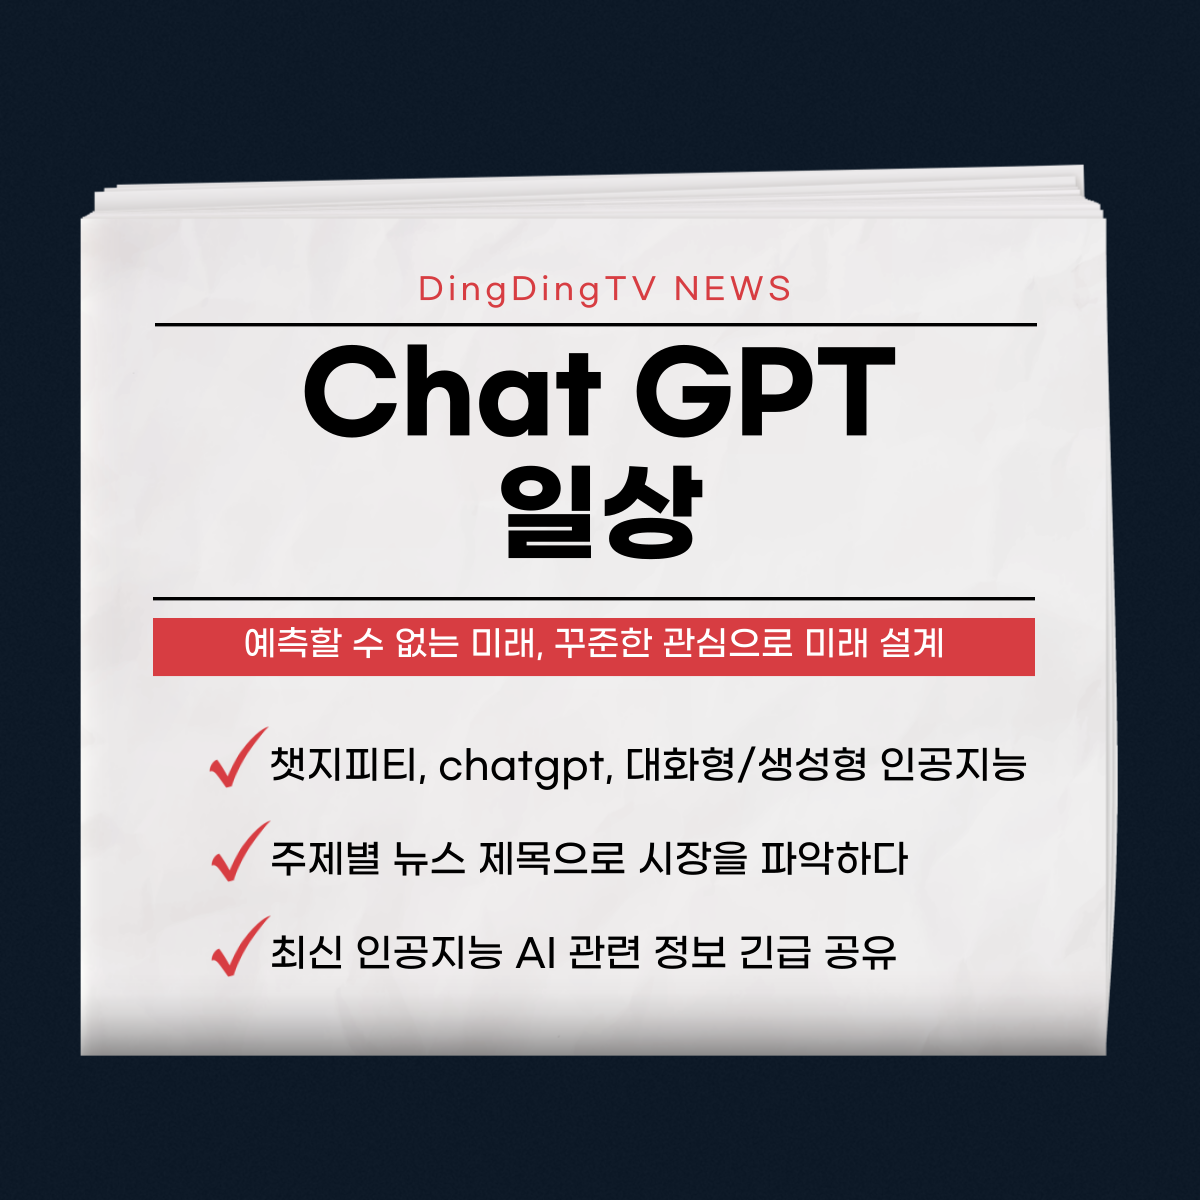 ChatGPT完全攻略ガイド - ChatGPTまとめ